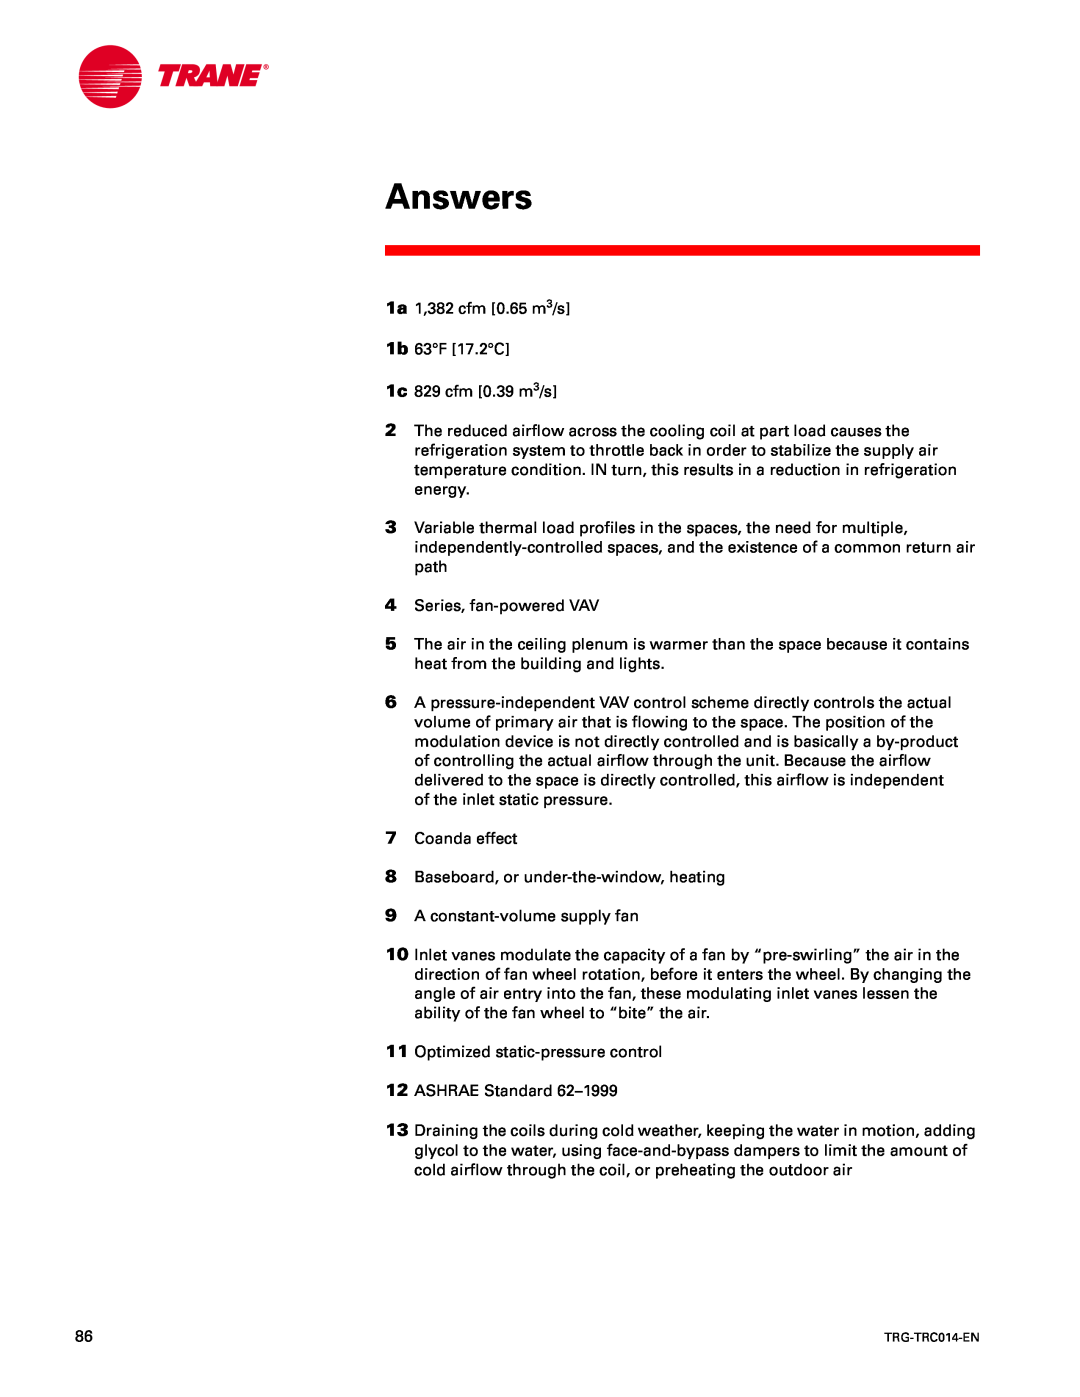 Trane TRG-TRC014-EN manual Answers 